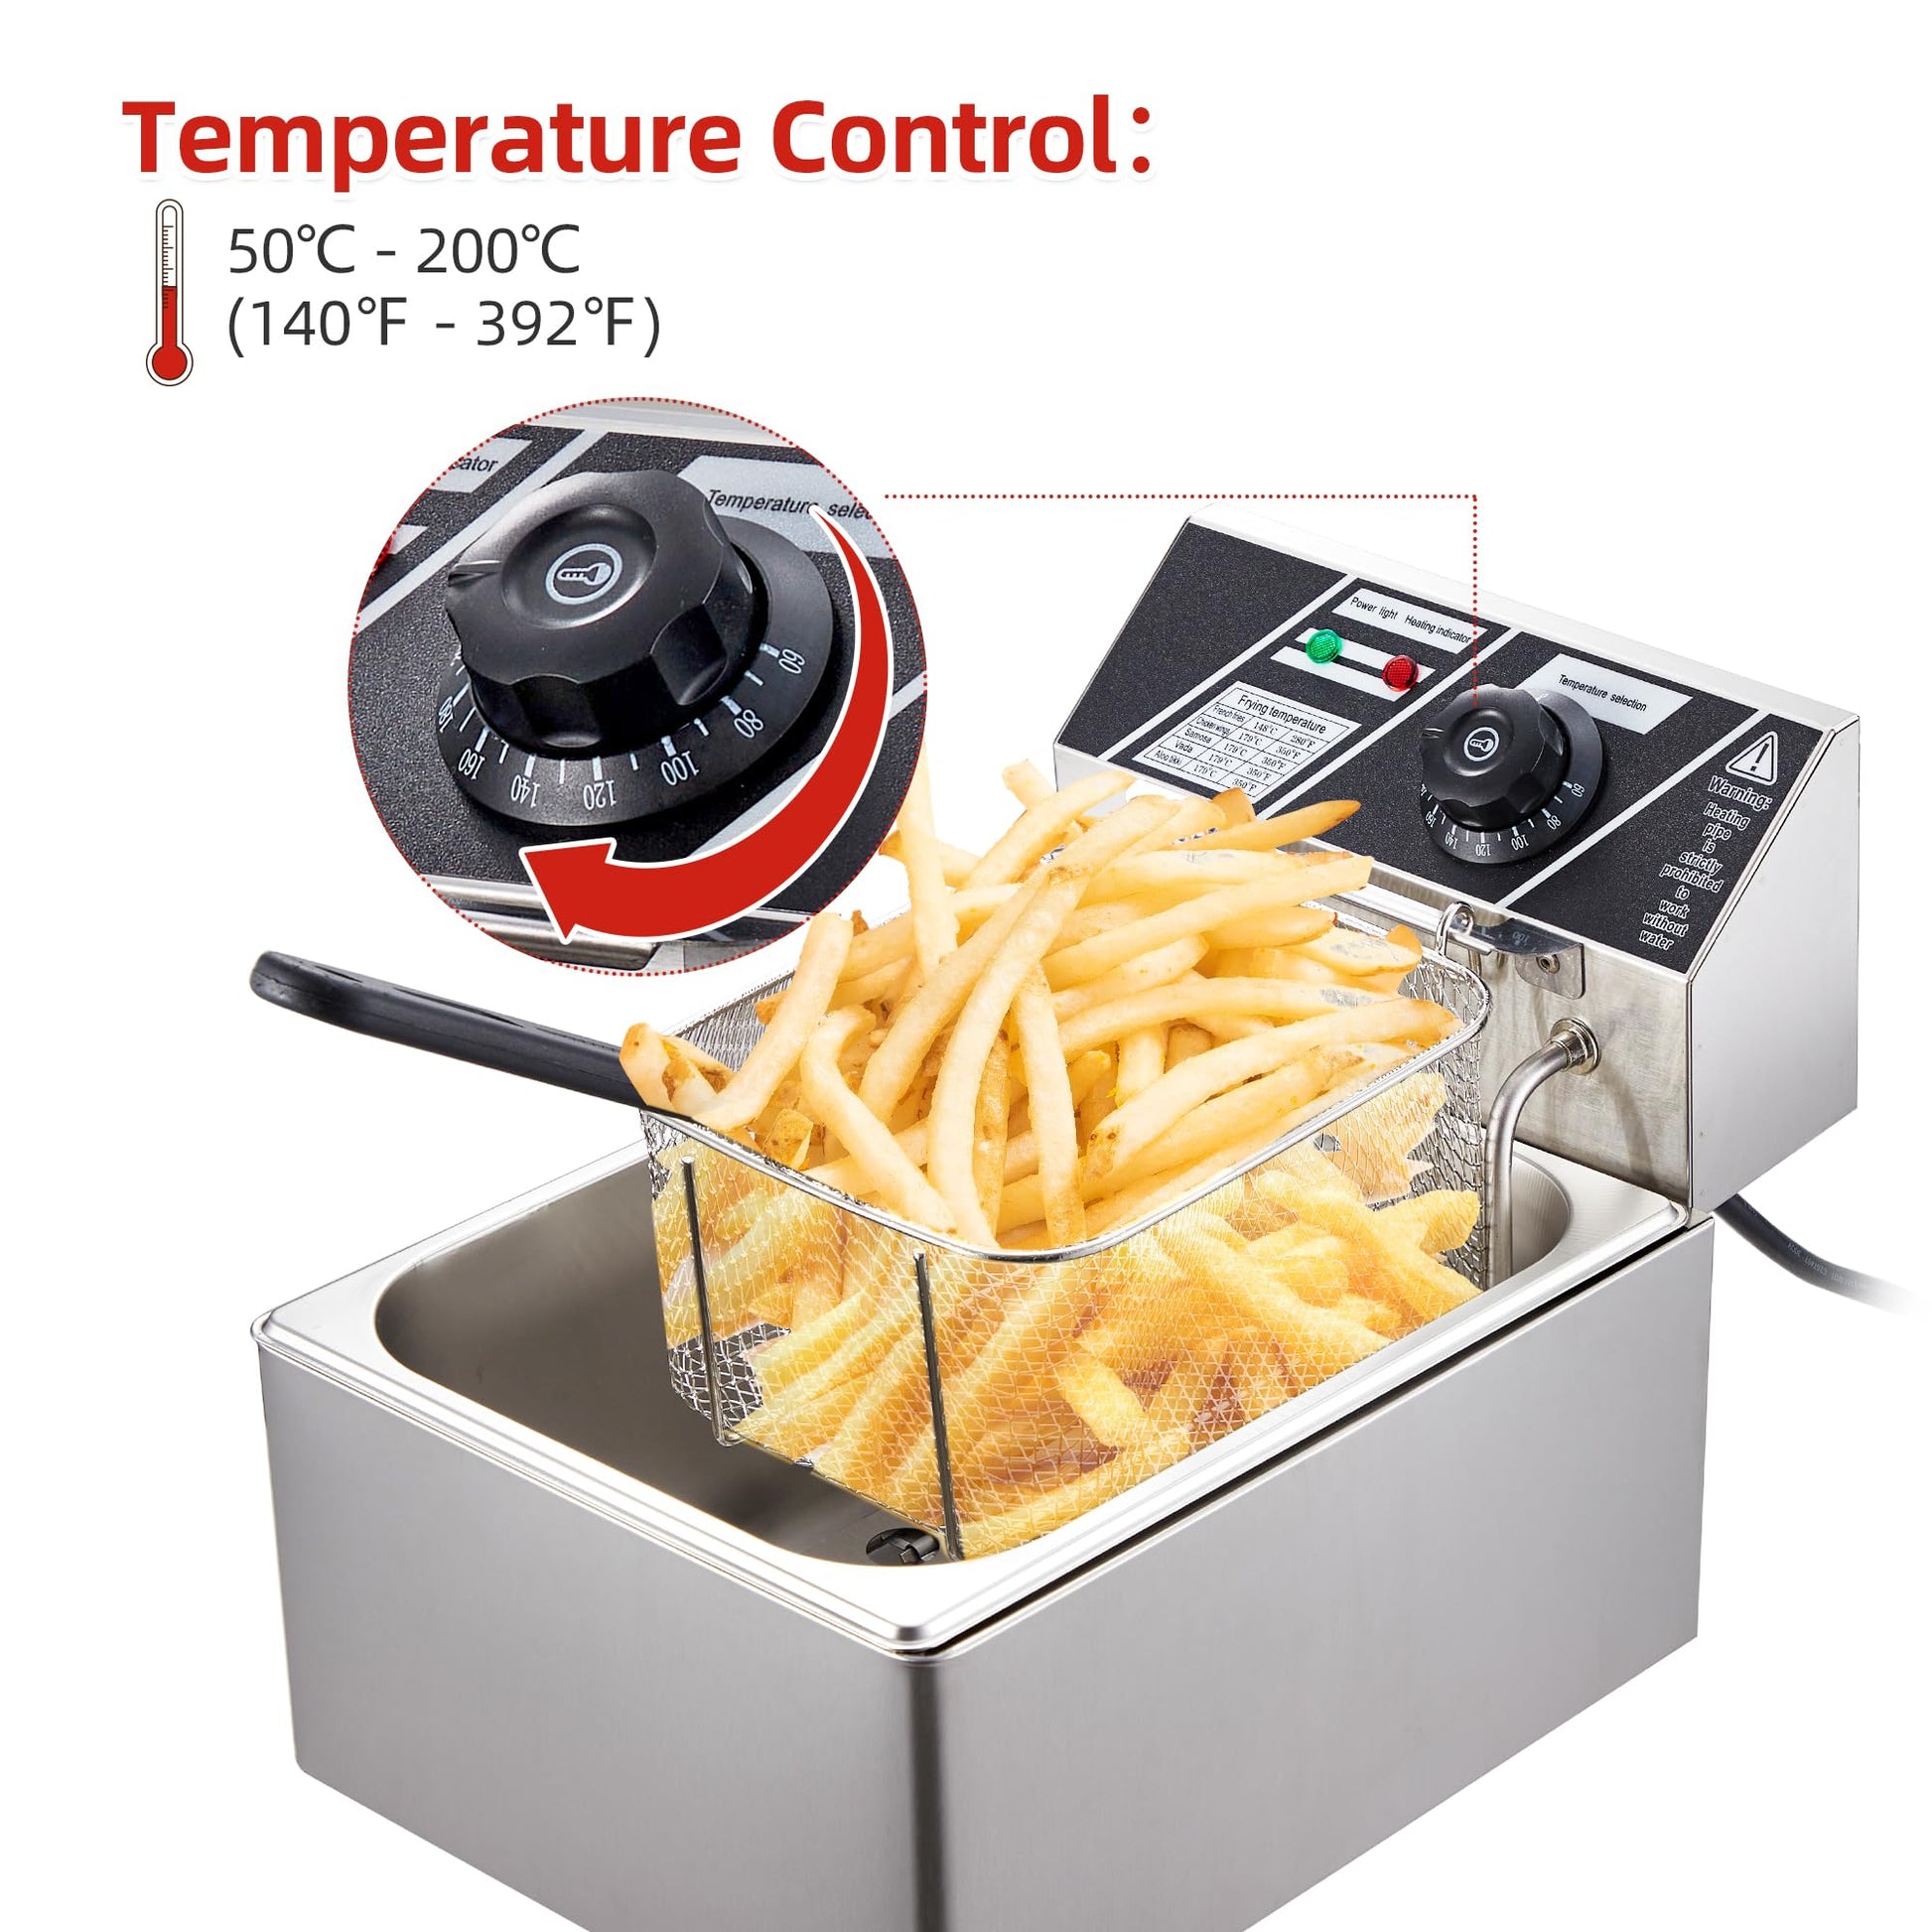 11L/11.6Qts Deep Fryer w/ Temp Control for Chicken & Fries